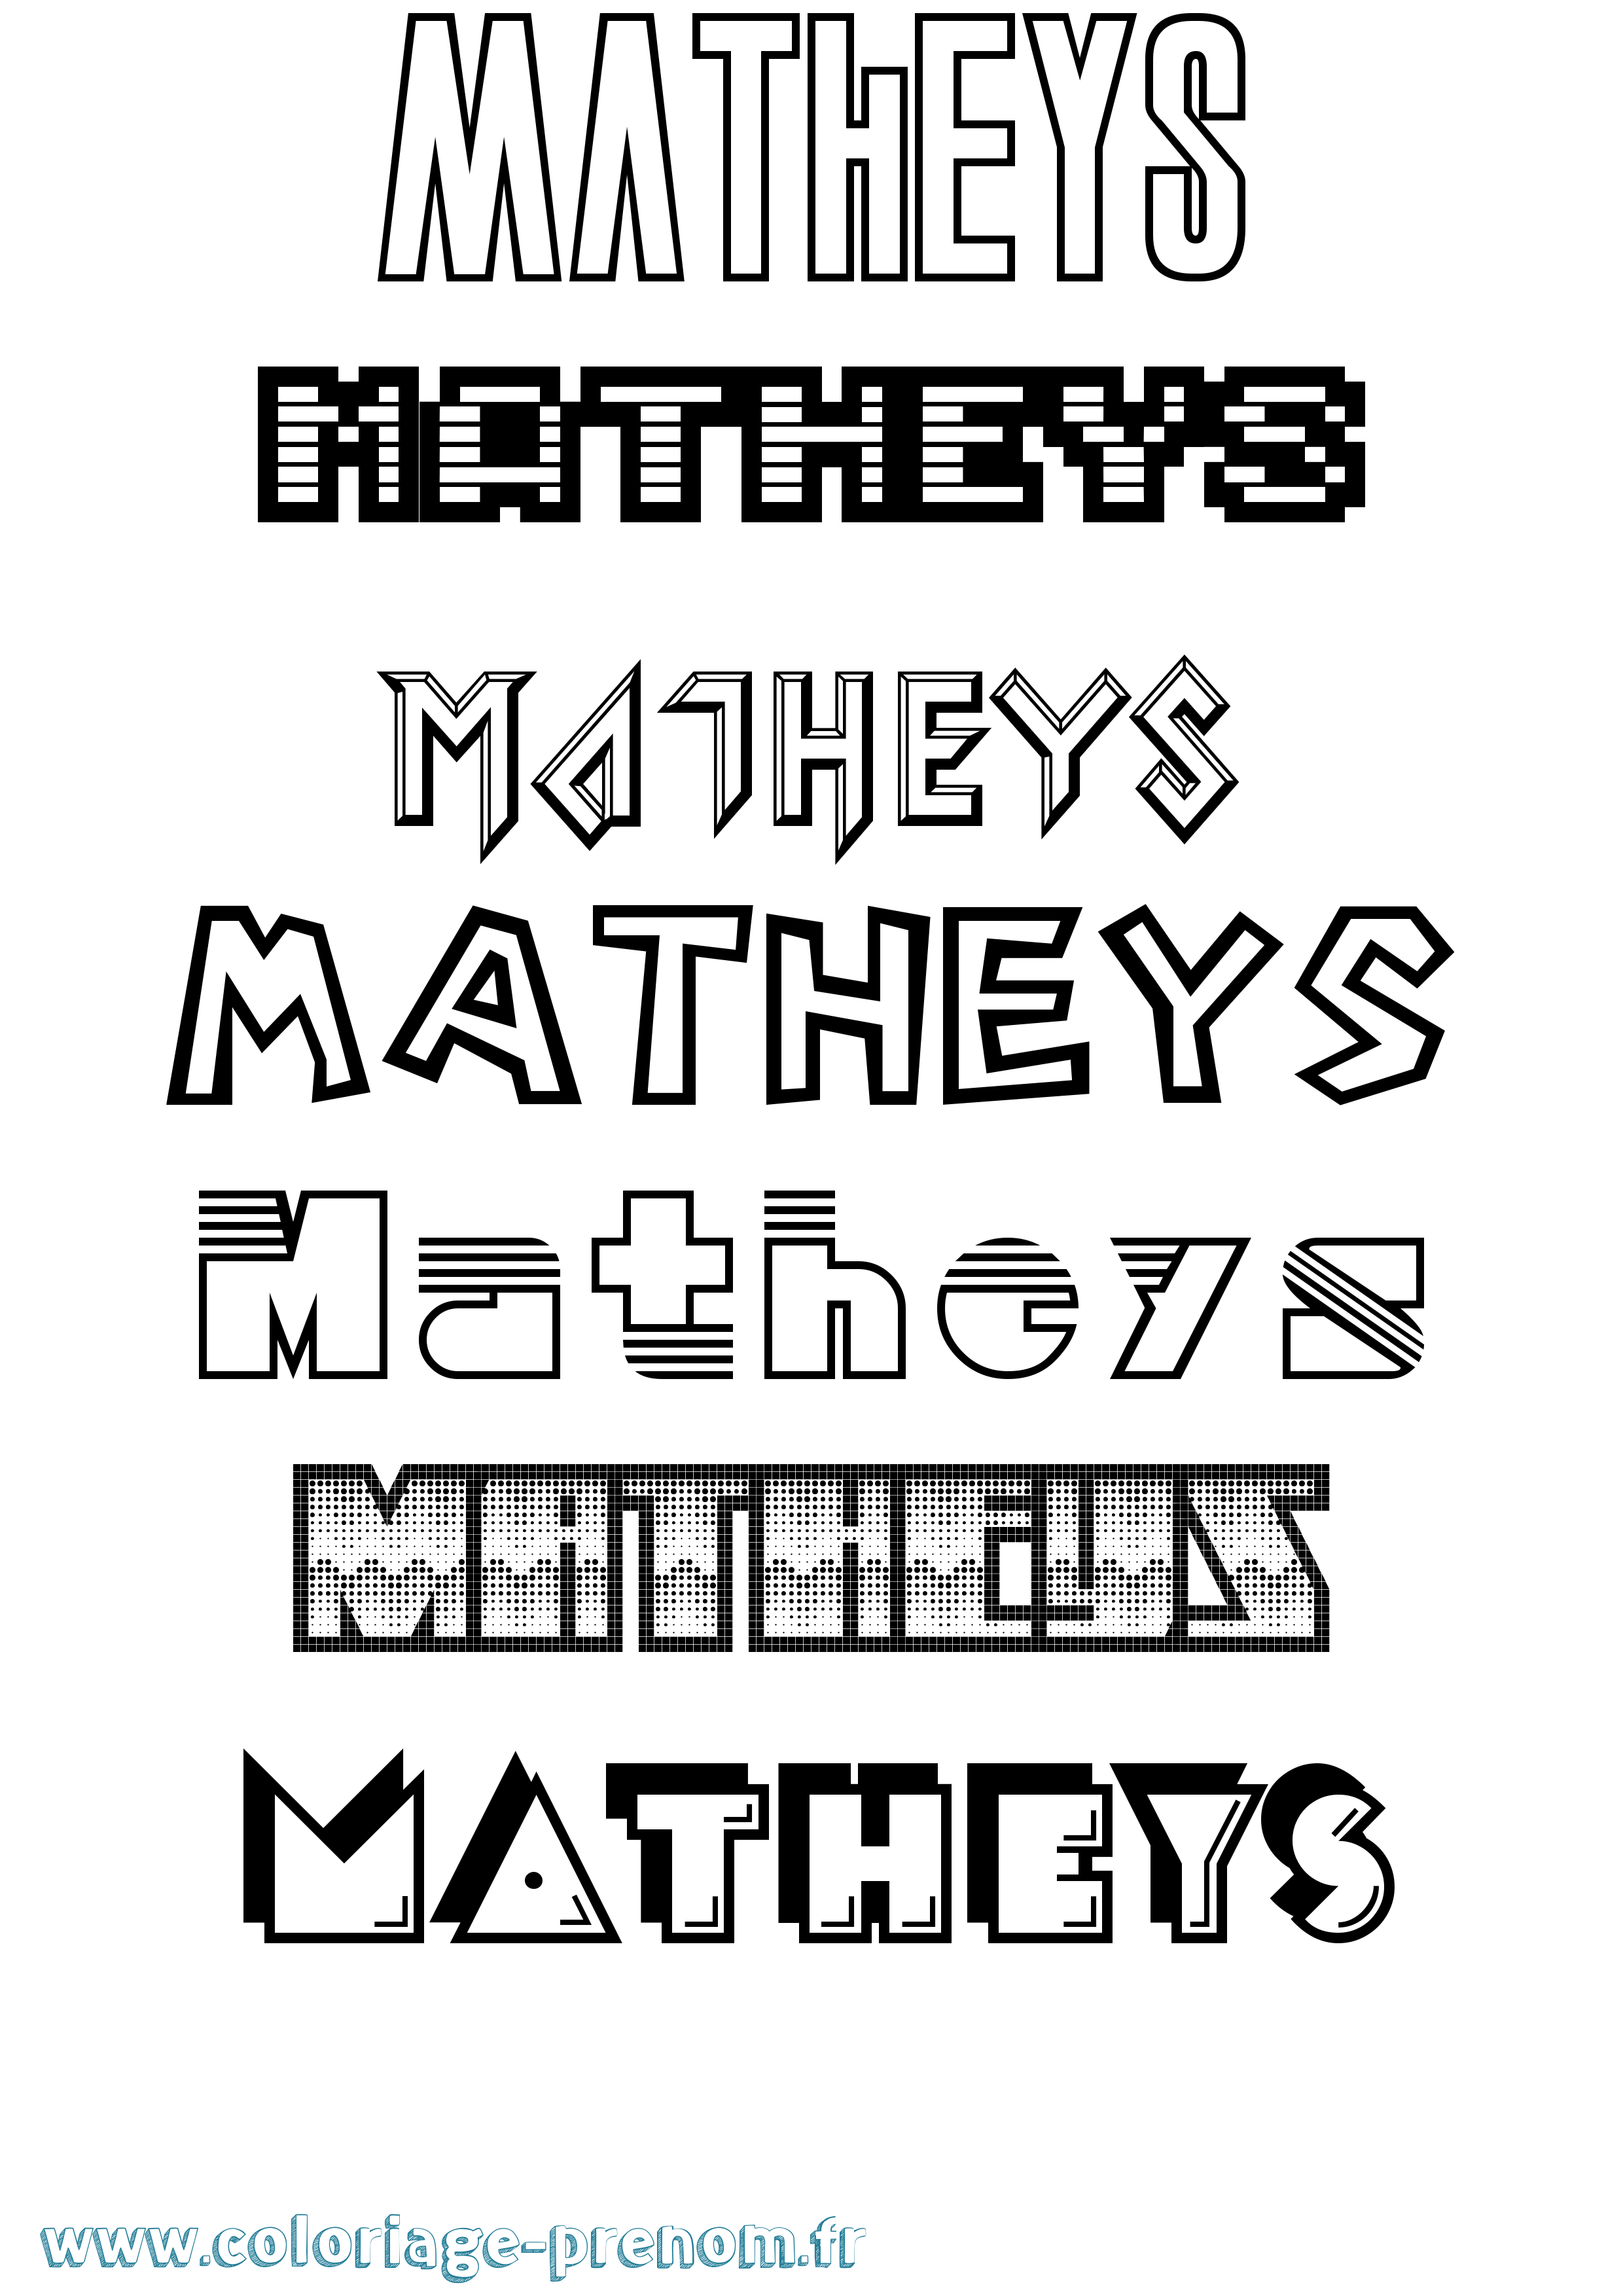 Coloriage prénom Matheys Jeux Vidéos